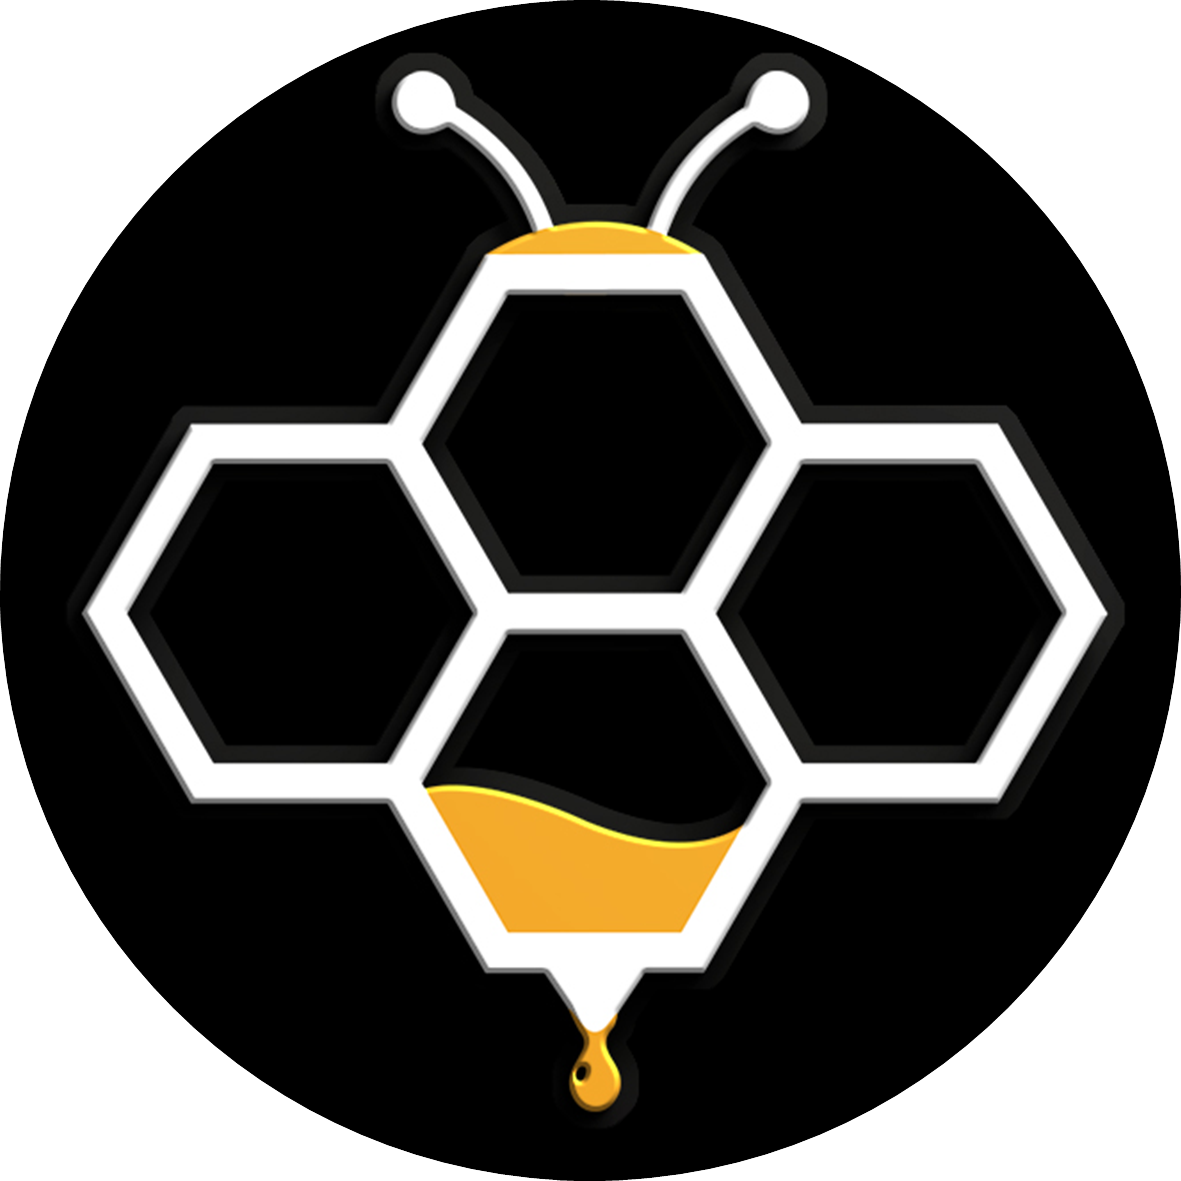 Honeybee iptv logo